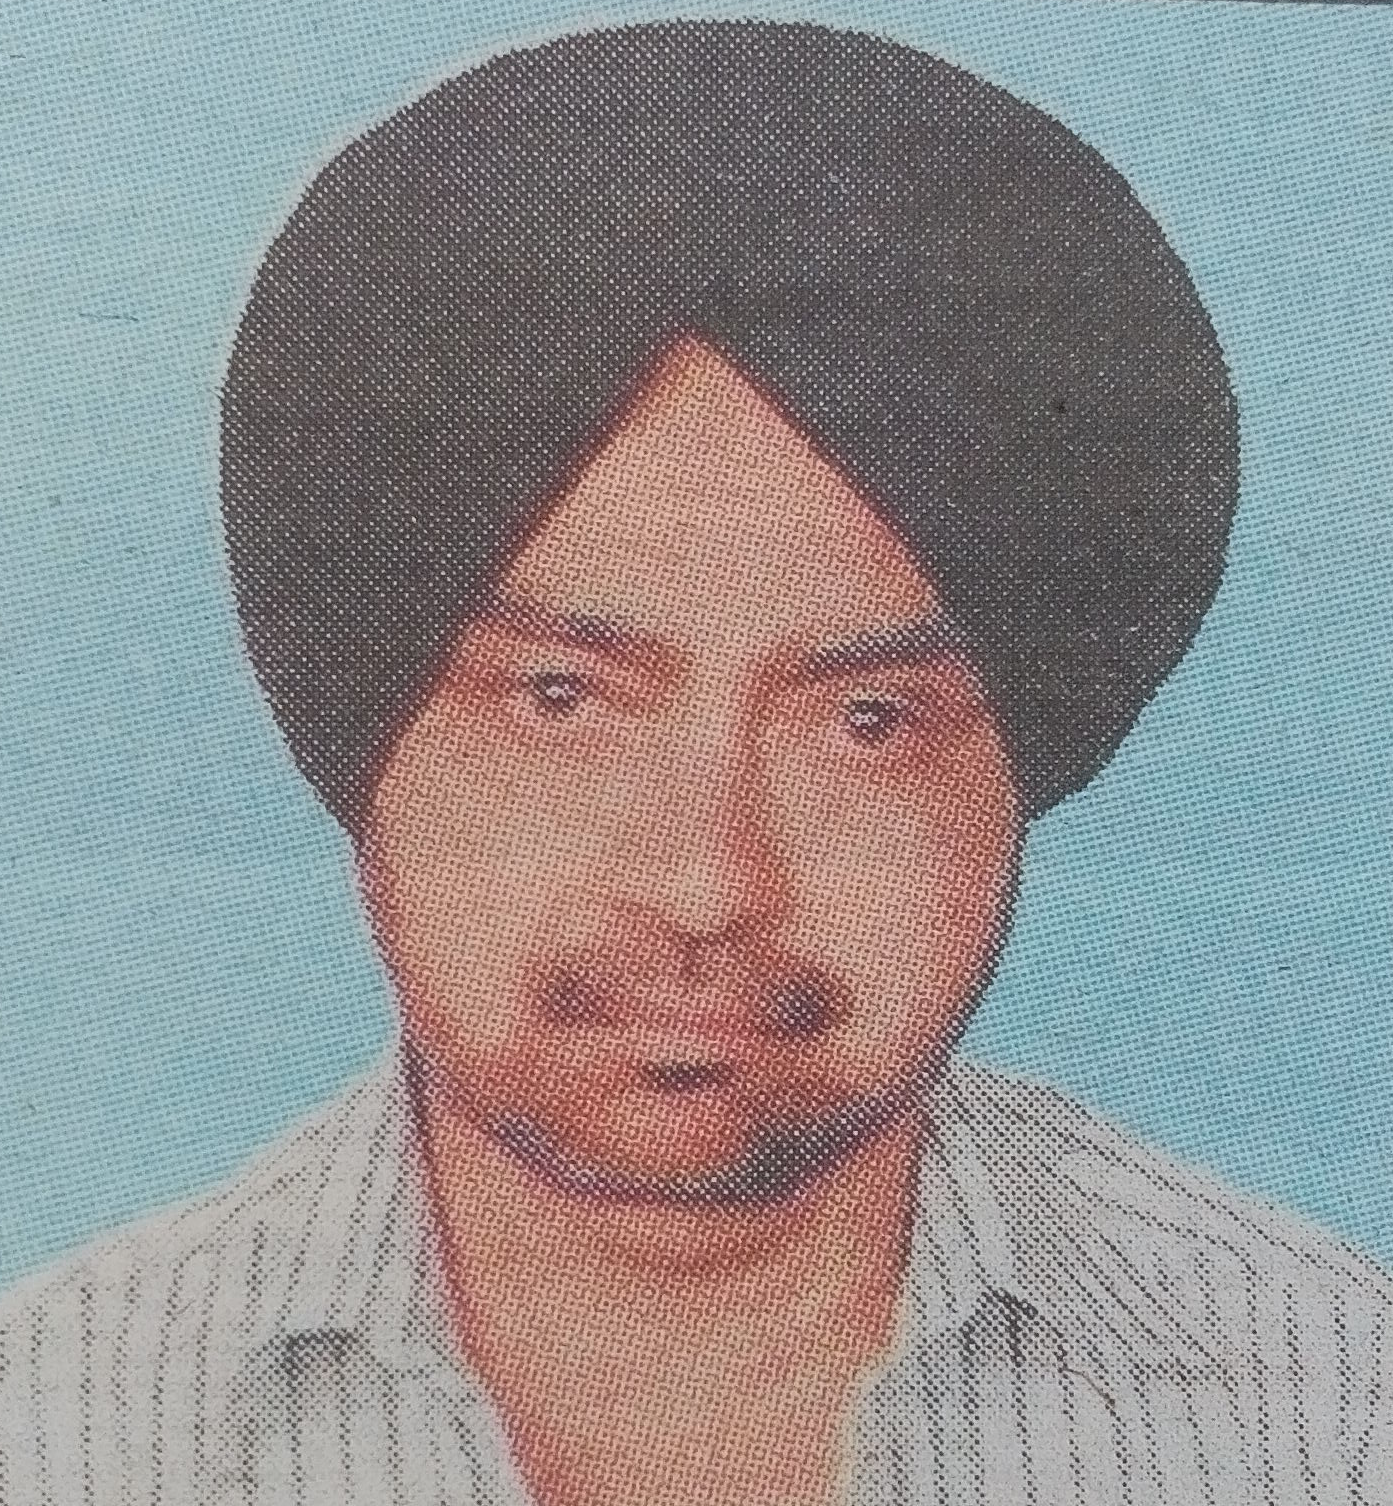 Obituary Image of Vasakha Singh Sondh